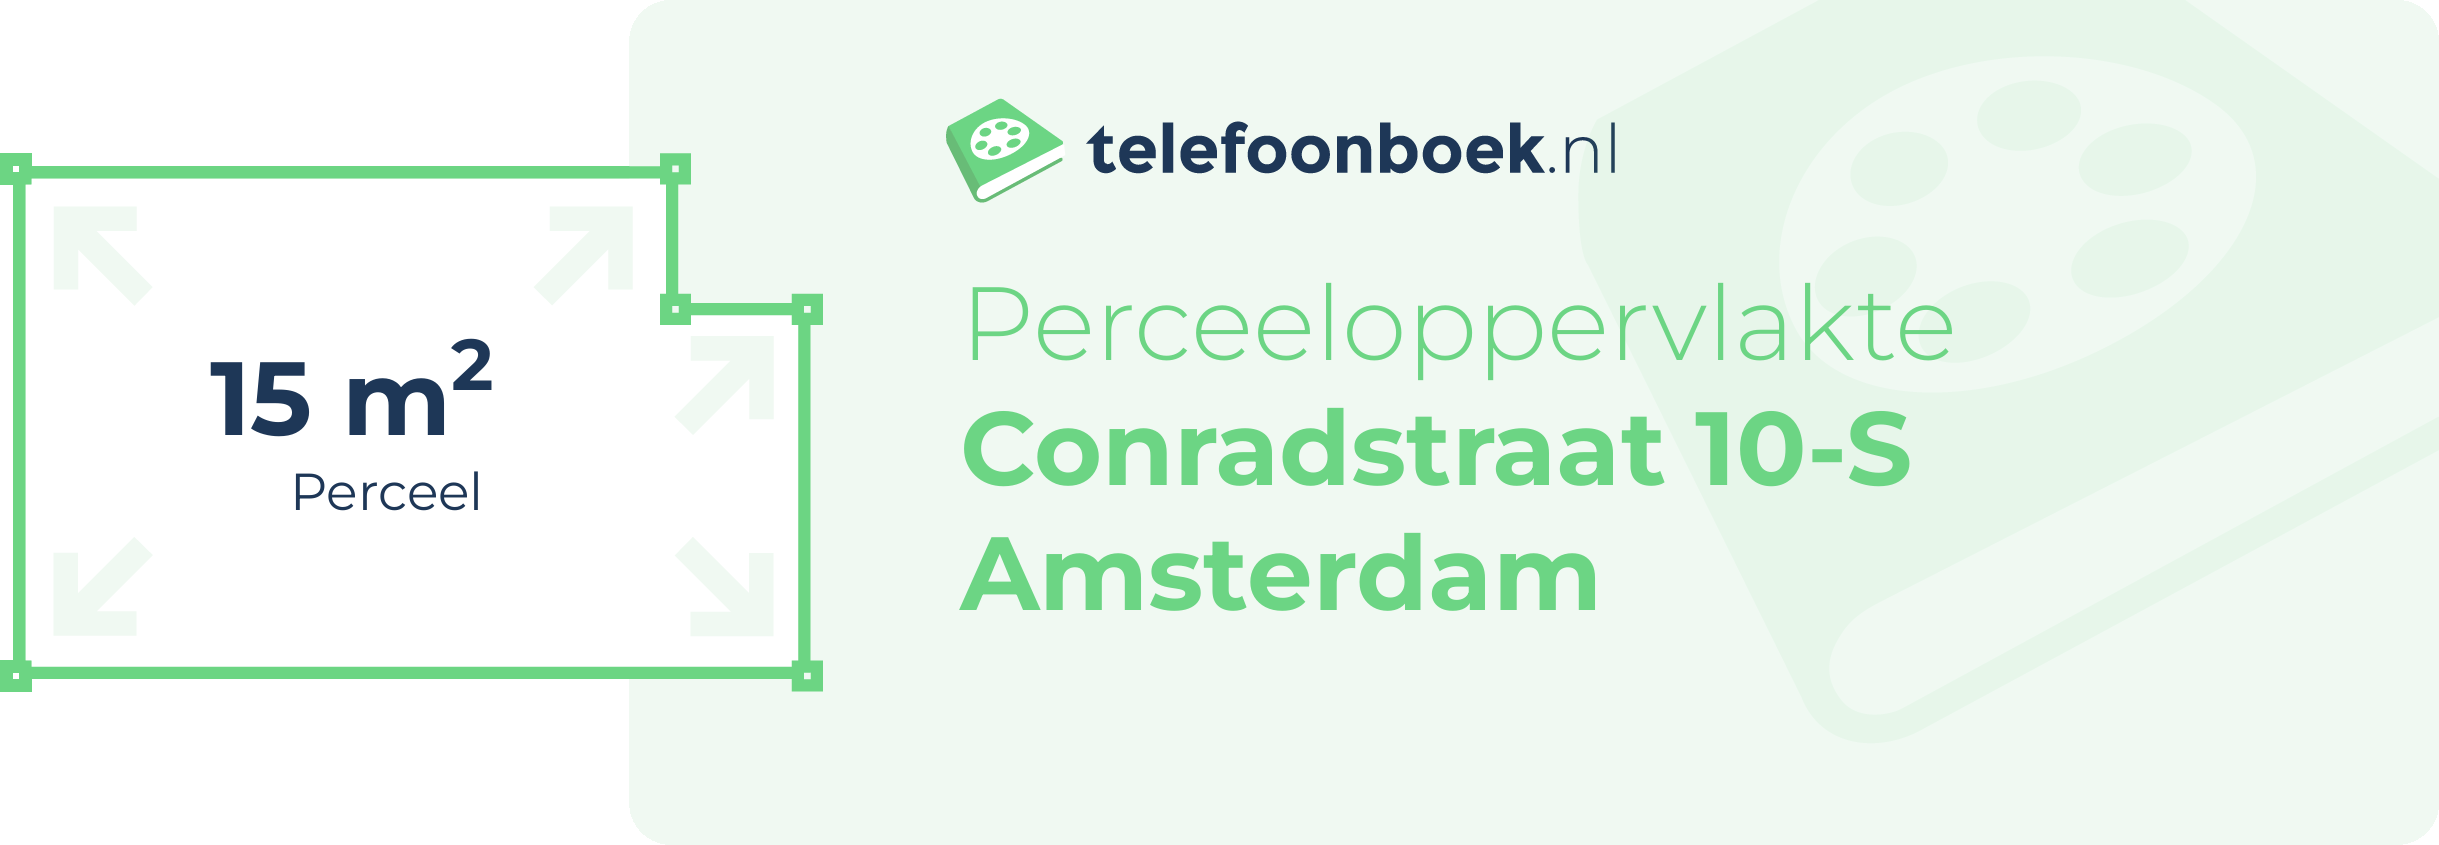 Perceeloppervlakte Conradstraat 10-S Amsterdam